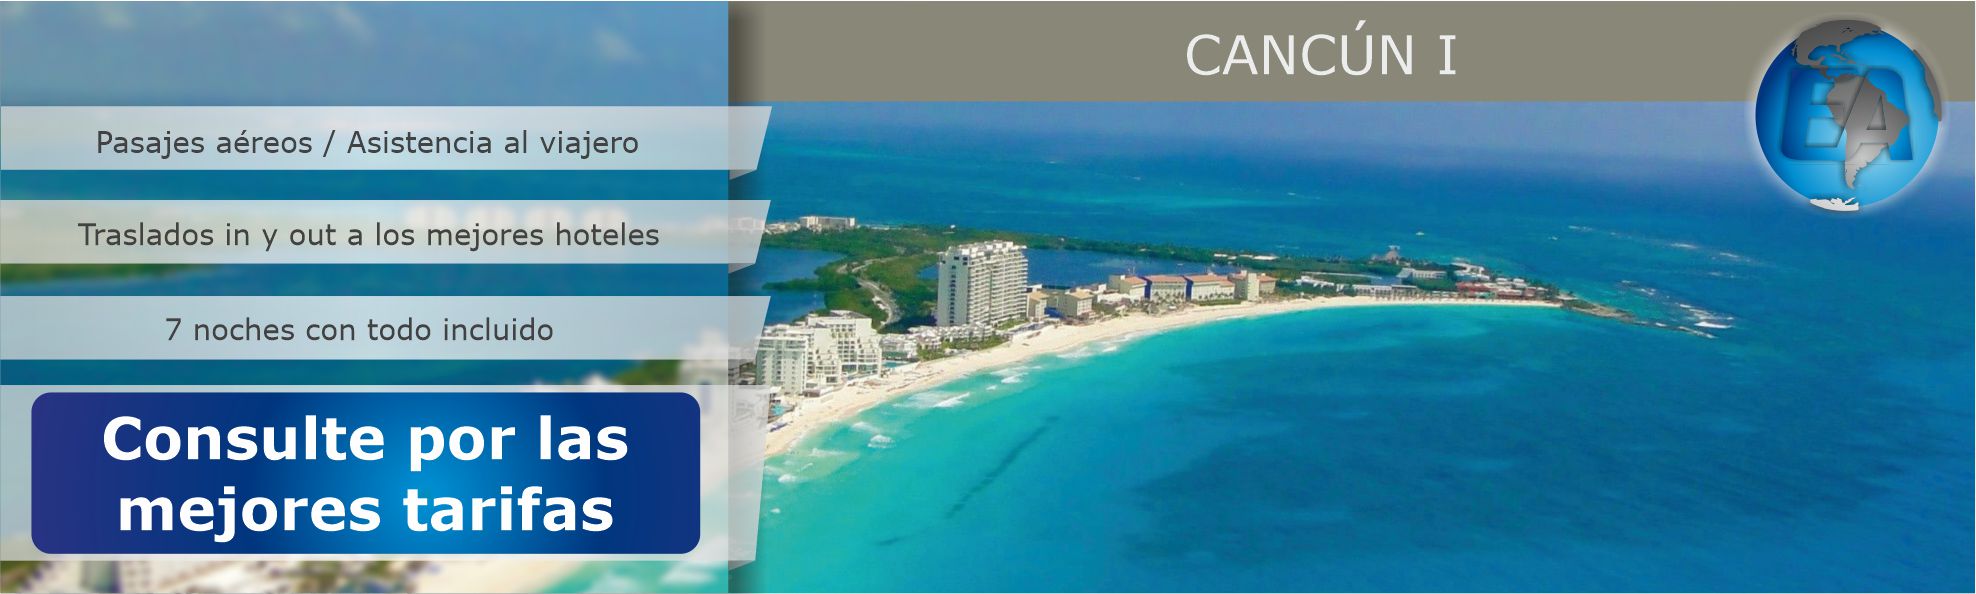 Cancún I